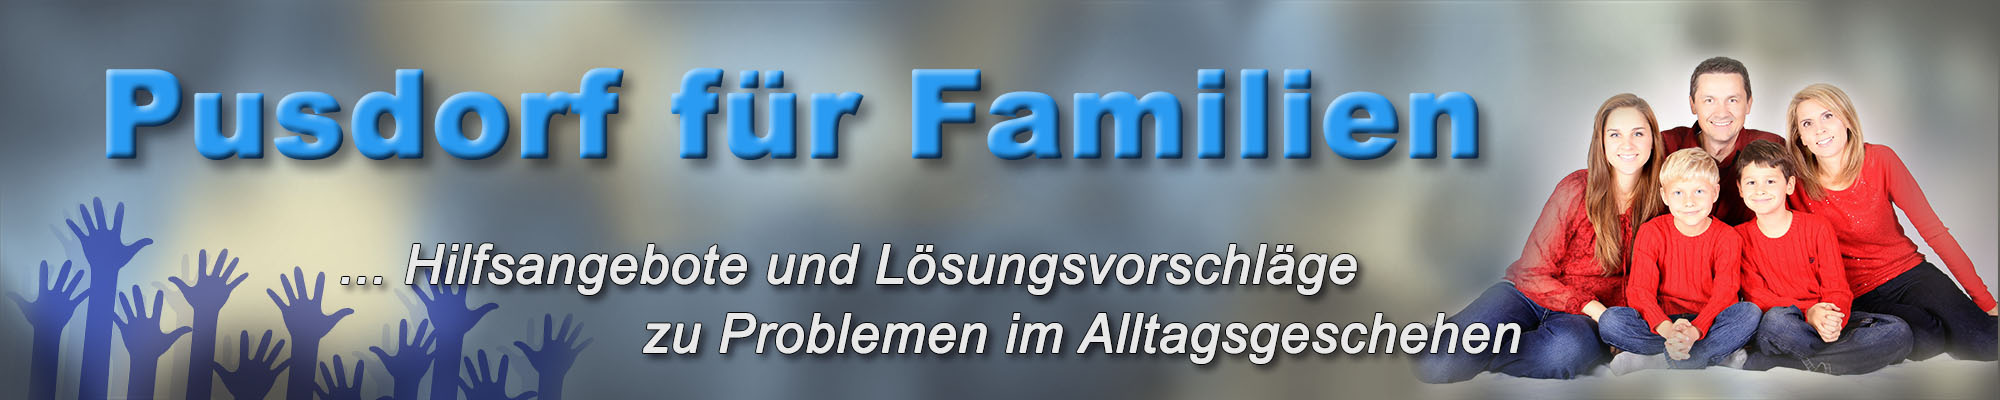 pusdorf.info - Infos, Hilfe & Beratung für Familien